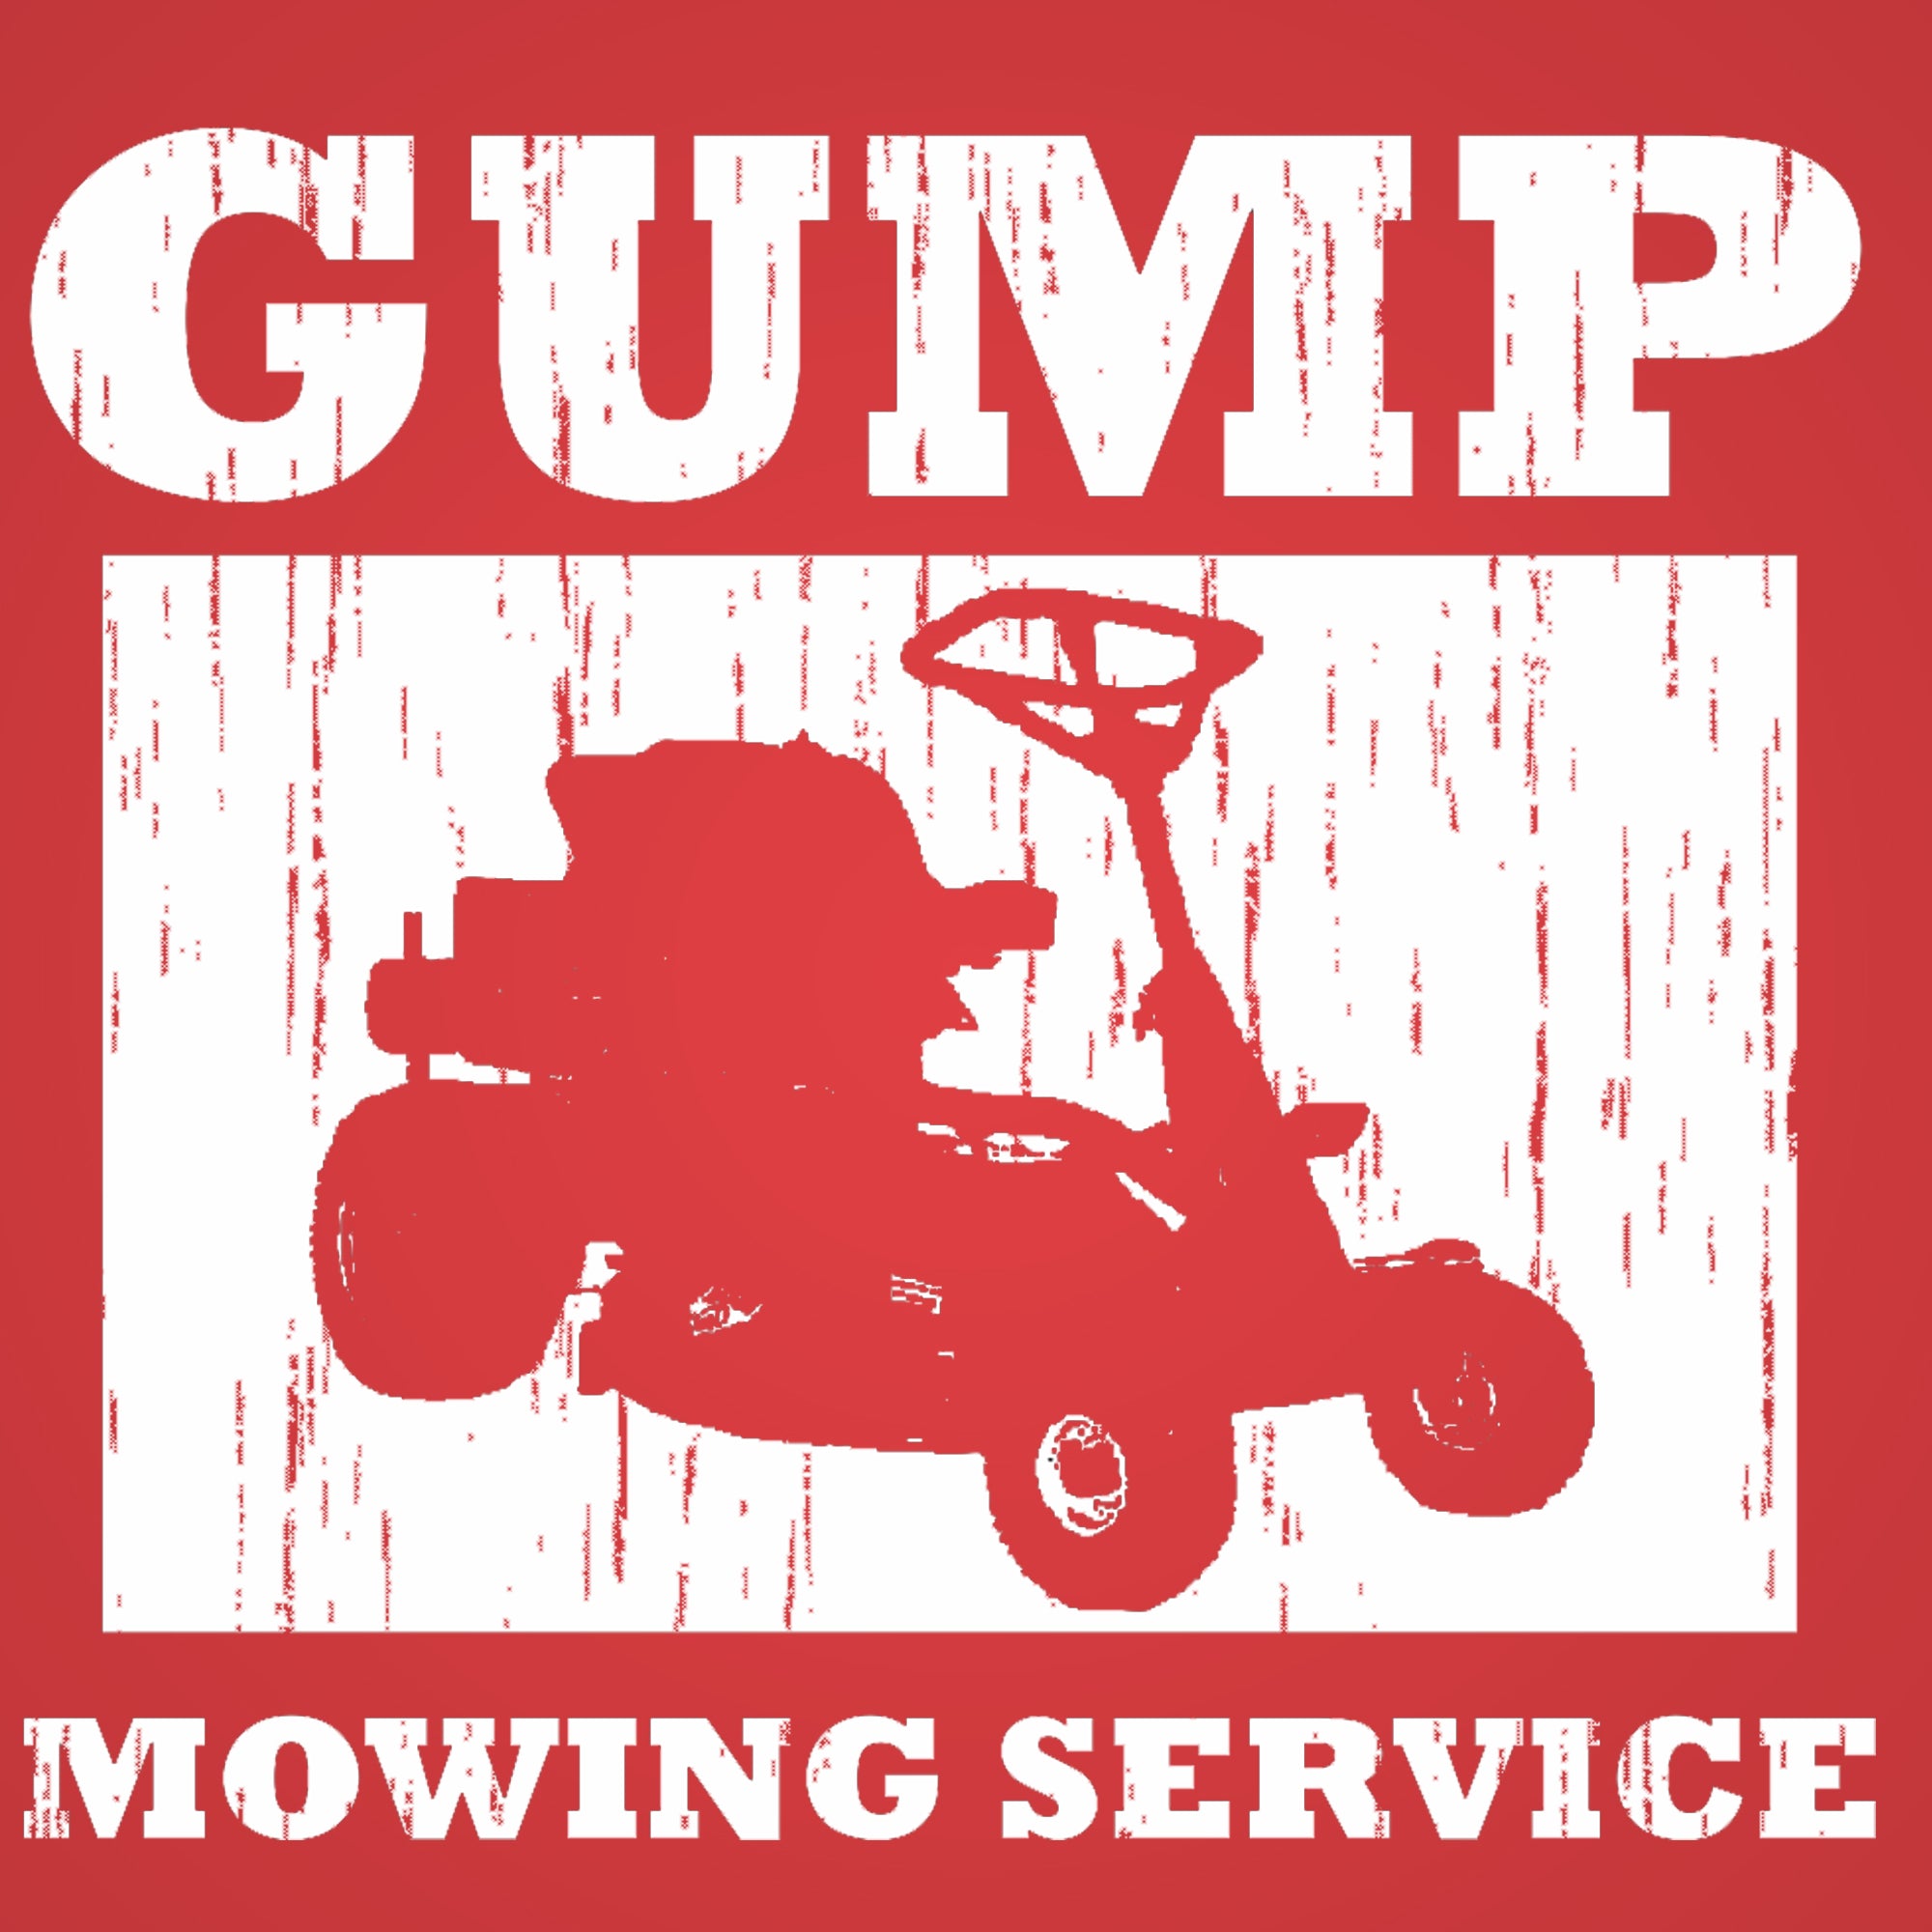 Gump Mowing Service Tshirt - Donkey Tees